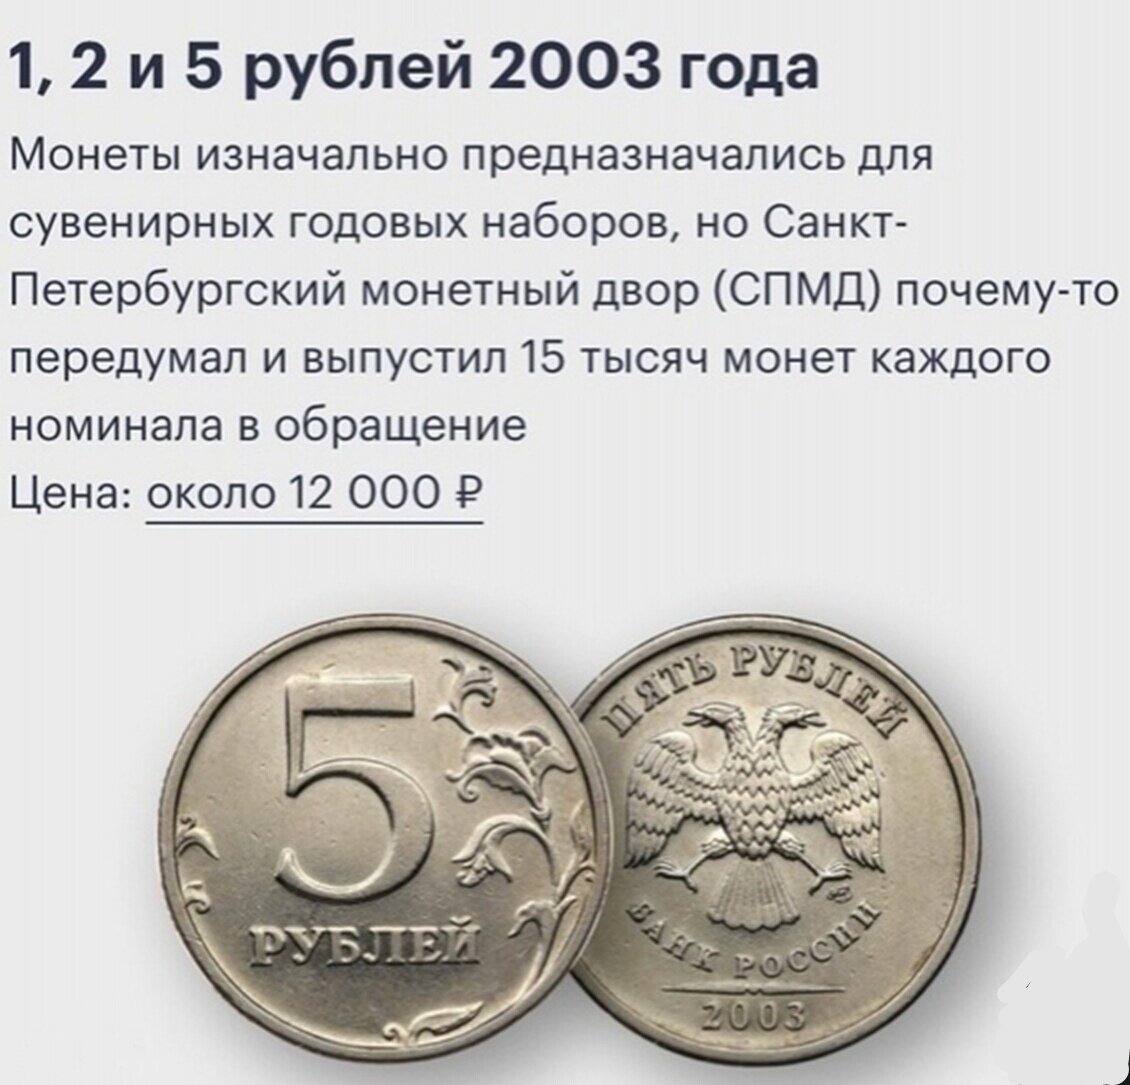 Какая дорогая монета рублевая. Дорогие монеты. Ценные современные монеты. Современные дорогие монеты. Редкие дорогие монеты.